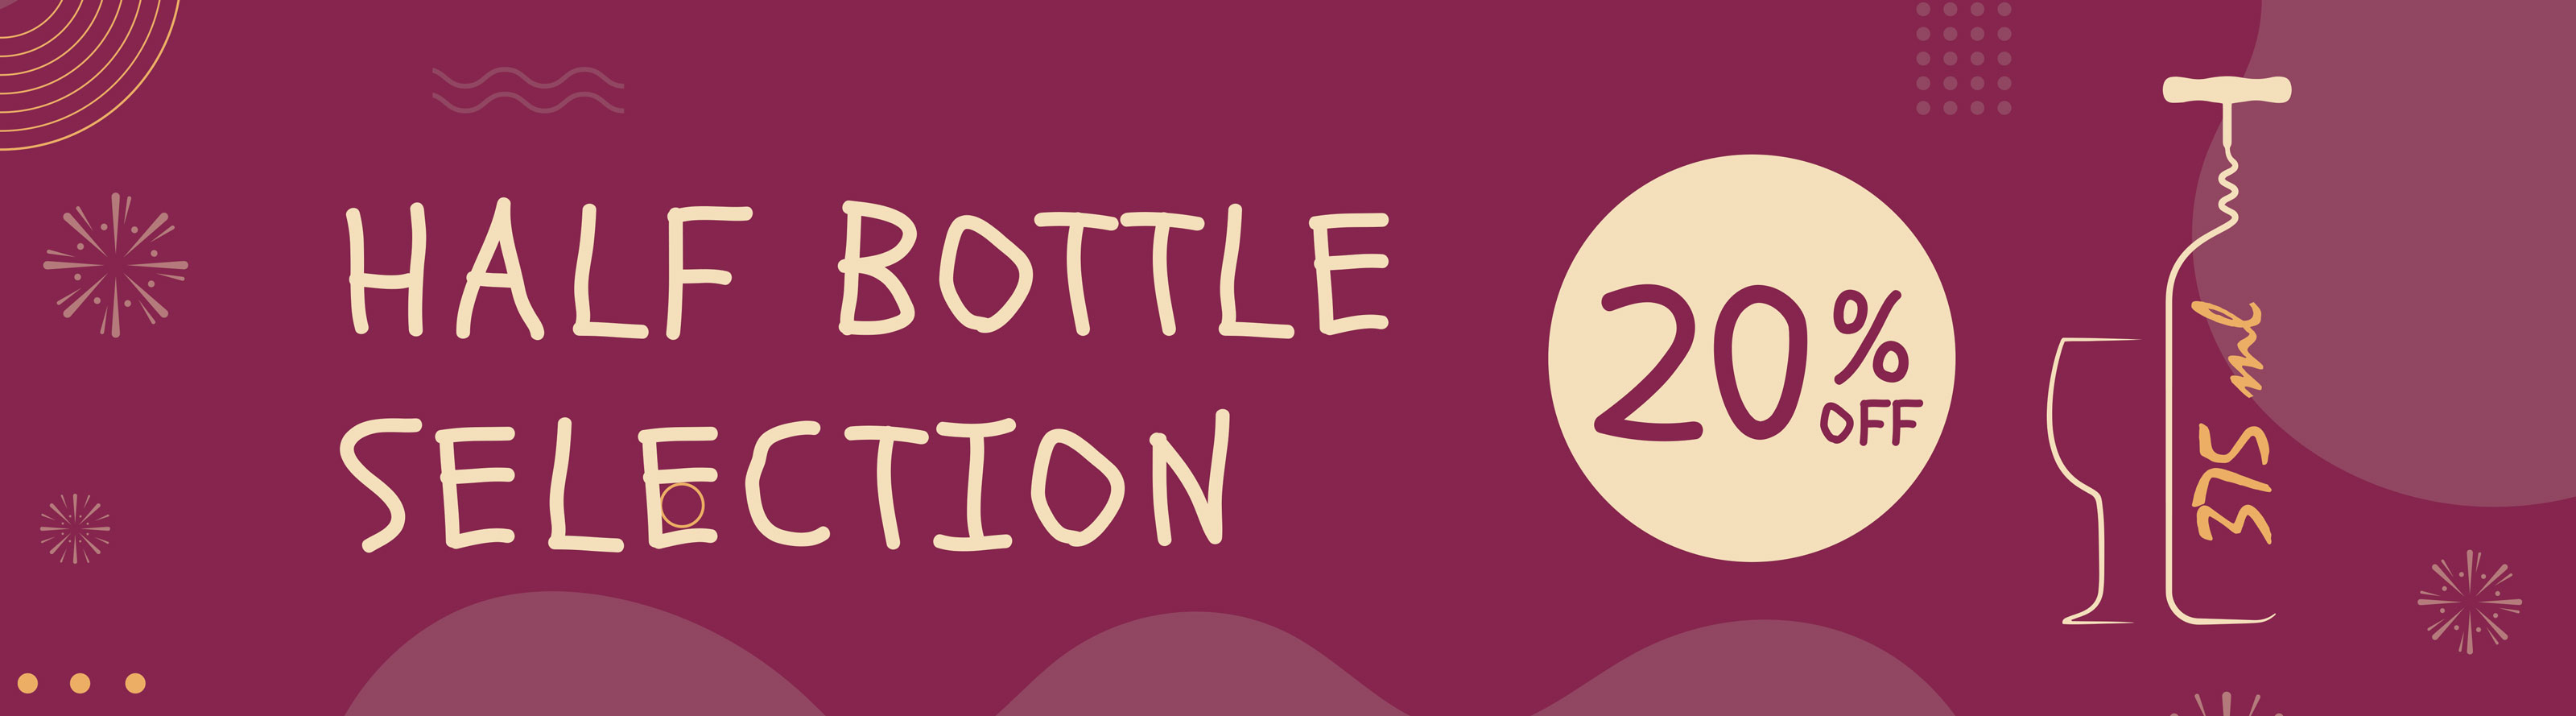 Half Bottle Selection